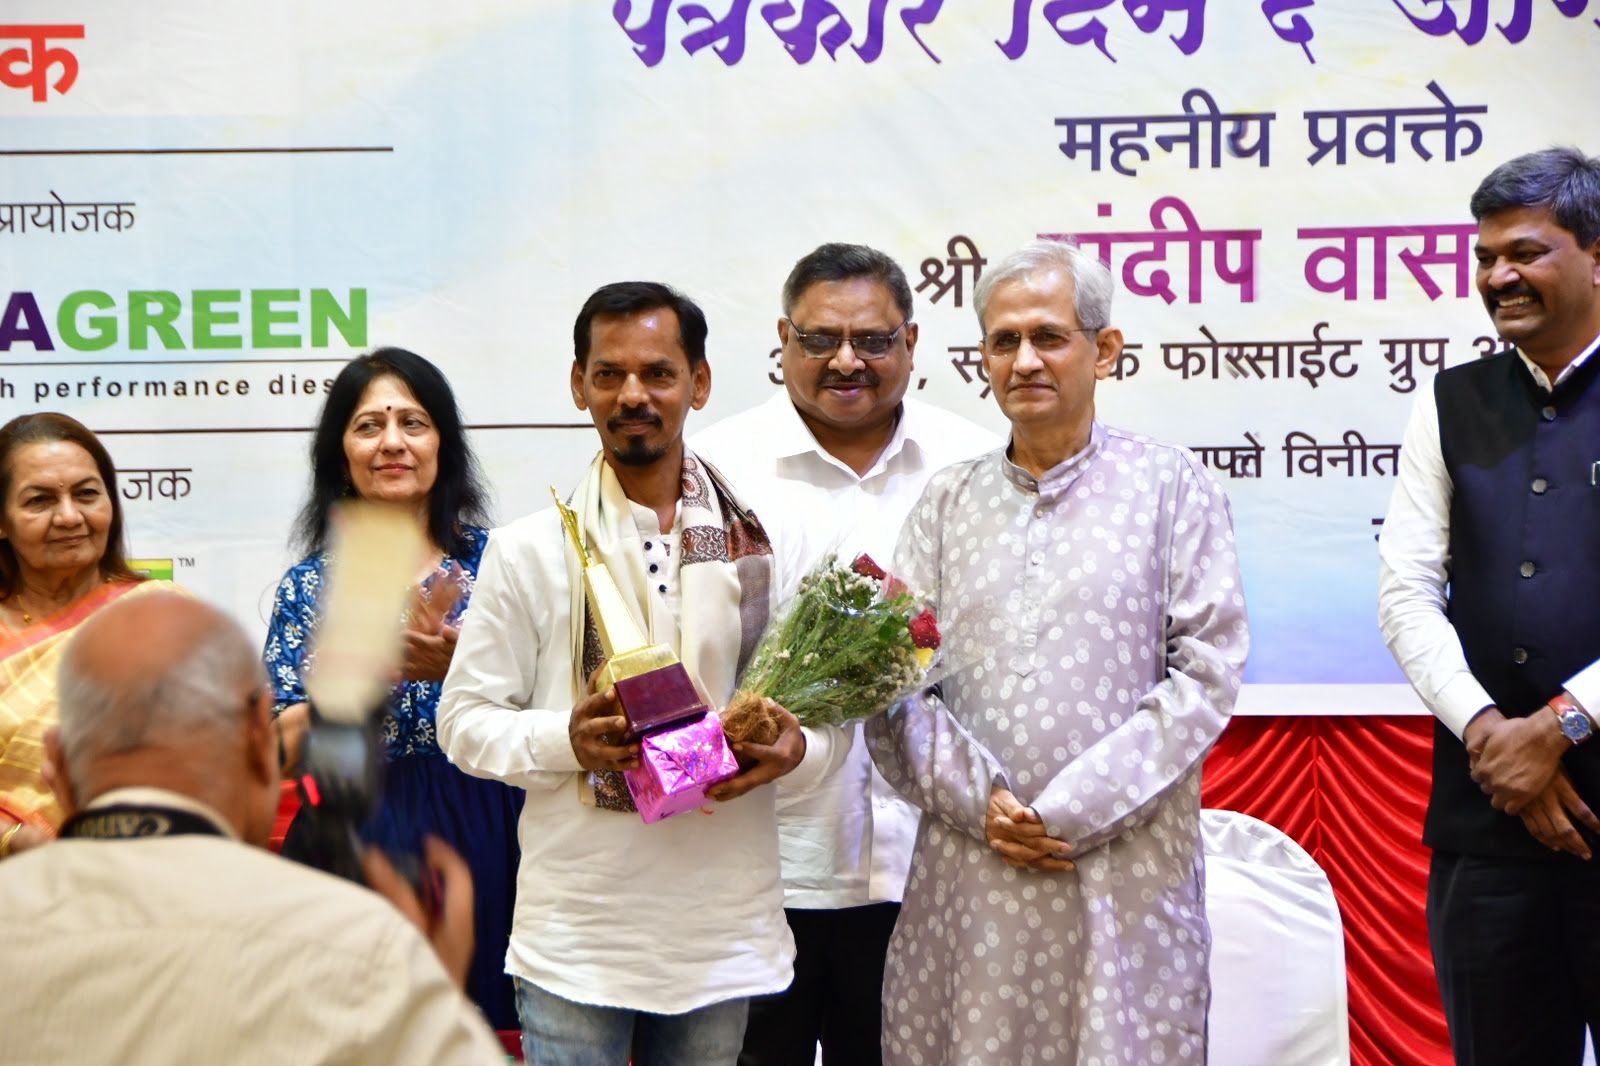 Journalist; Ram Khandare Honored with ‘Appa Pendse Journalism Award’